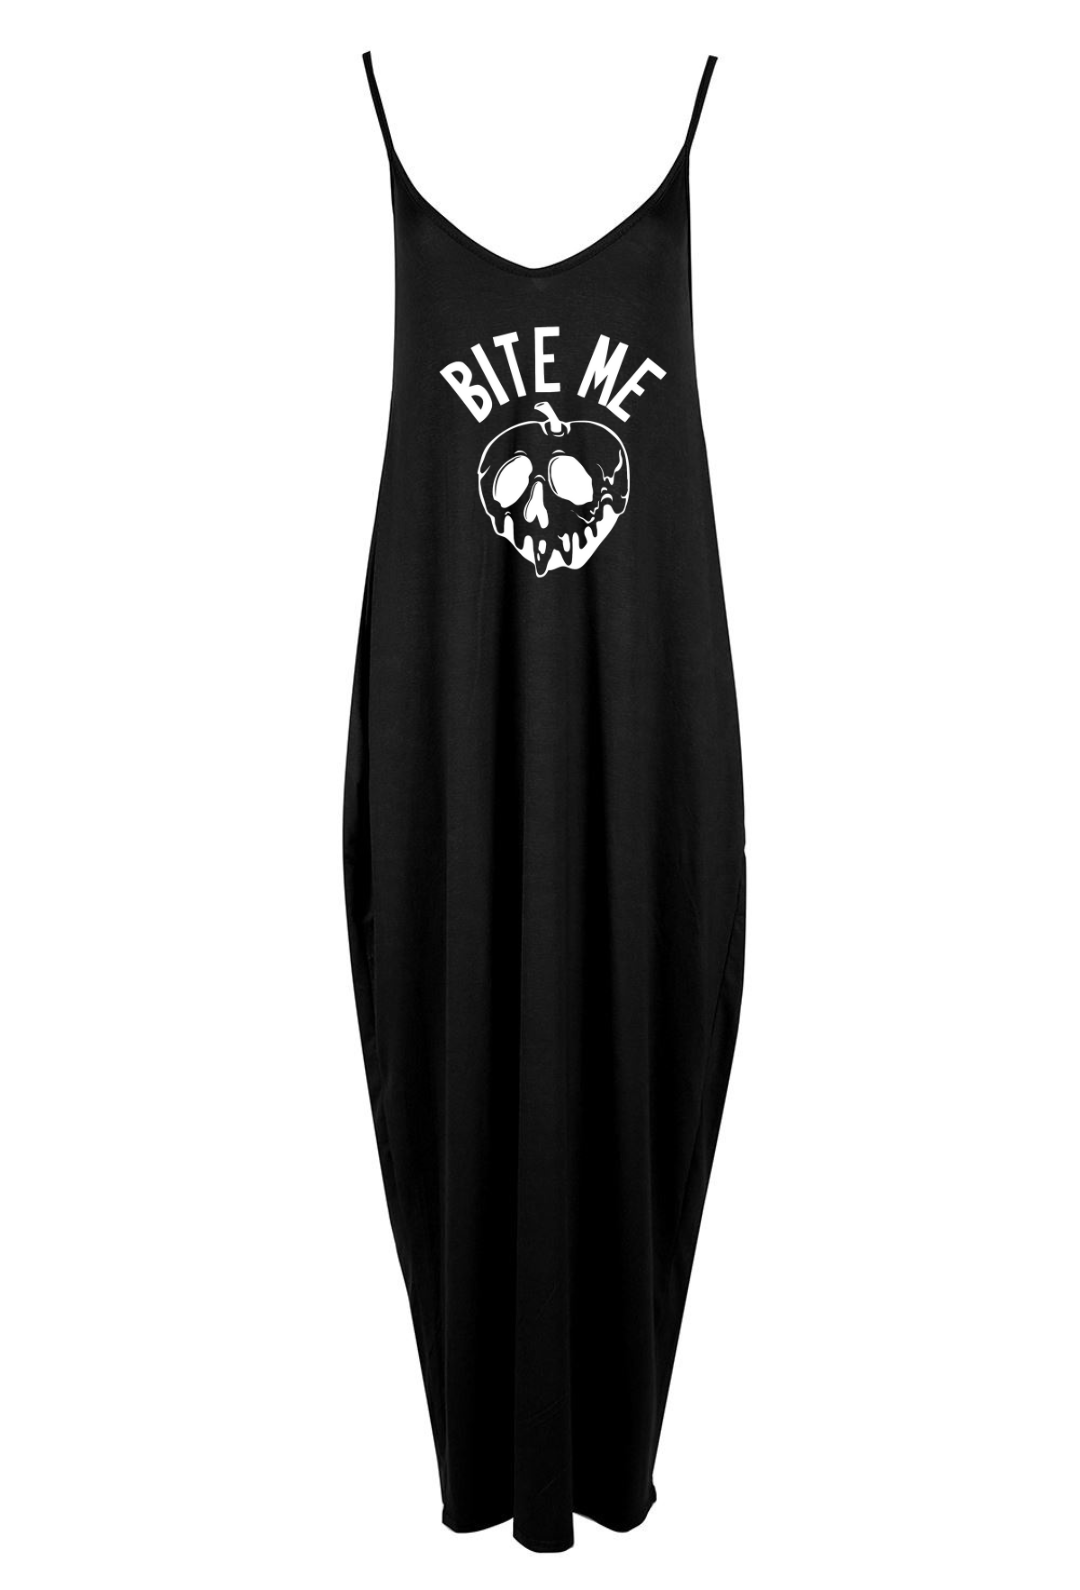 Black "Bite Me" Printed Maxi Camisole Dress